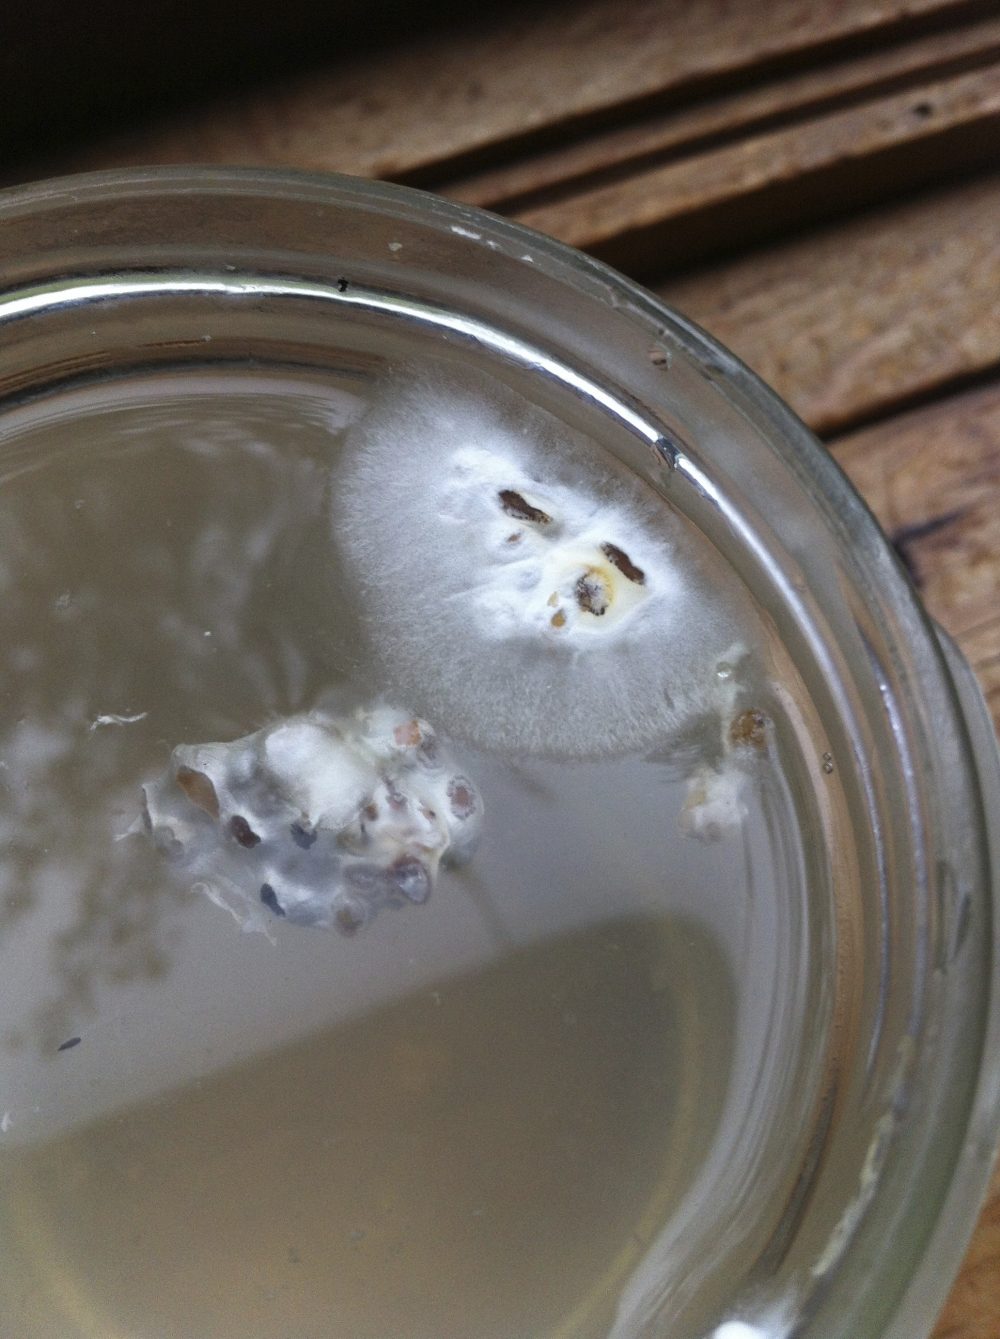 Blue Oyster mycelium on dishwater